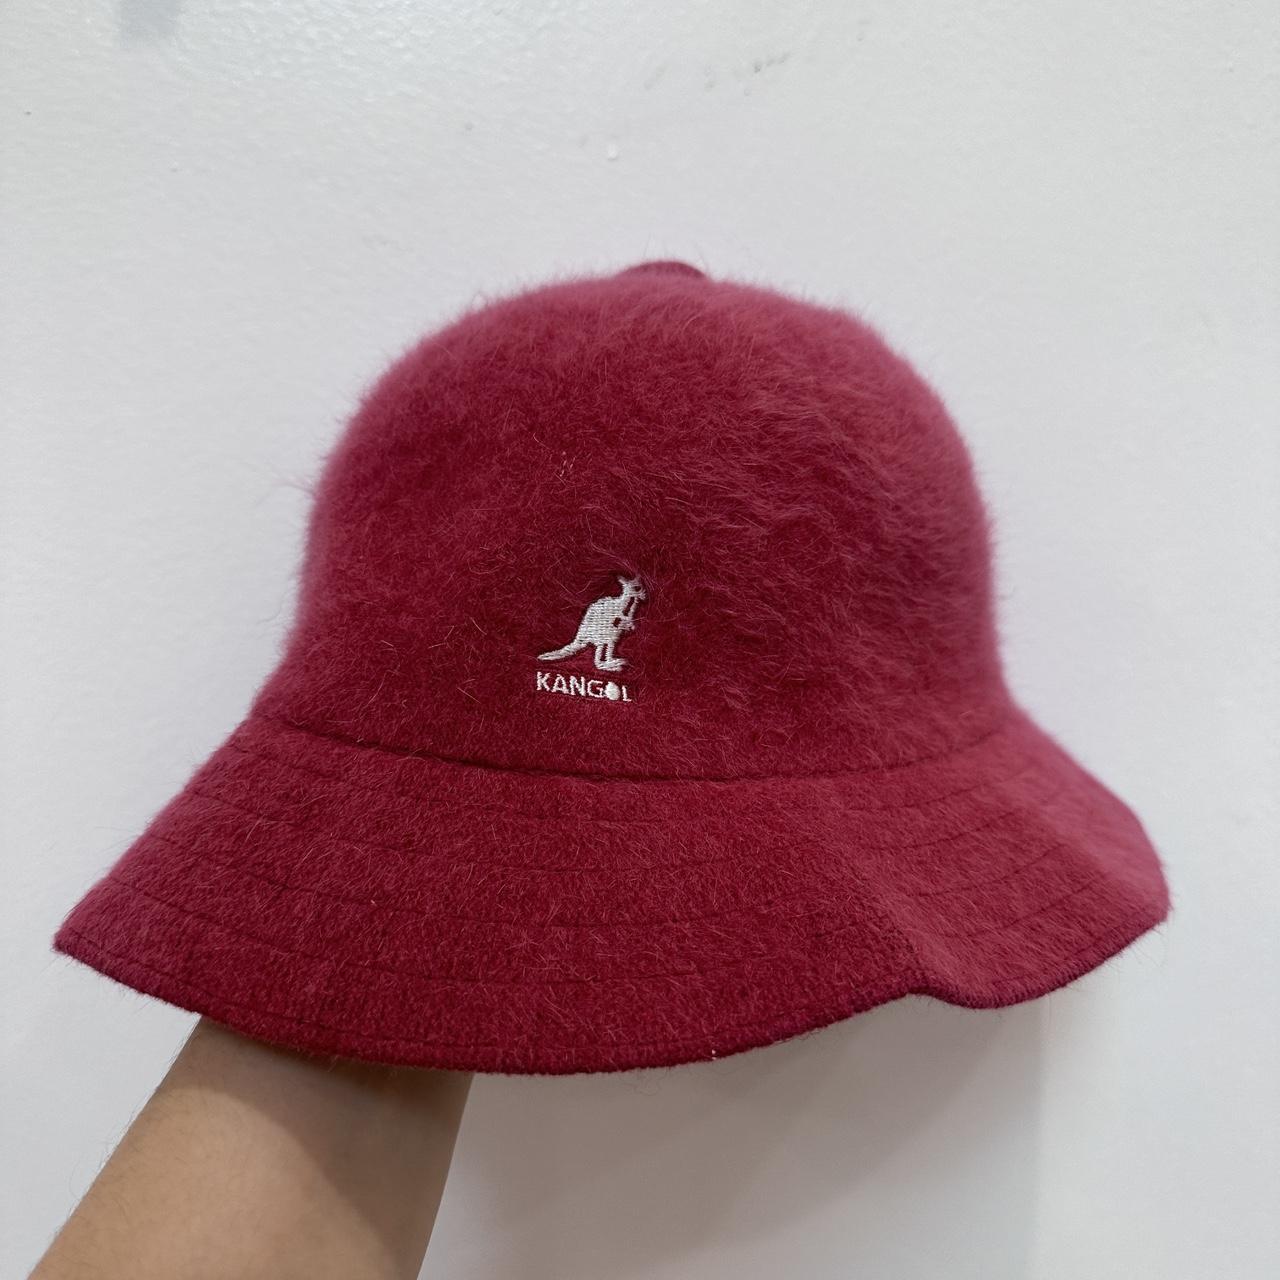 Kangol raspberry bucket hat 💗 #buckethat #kangol - Depop